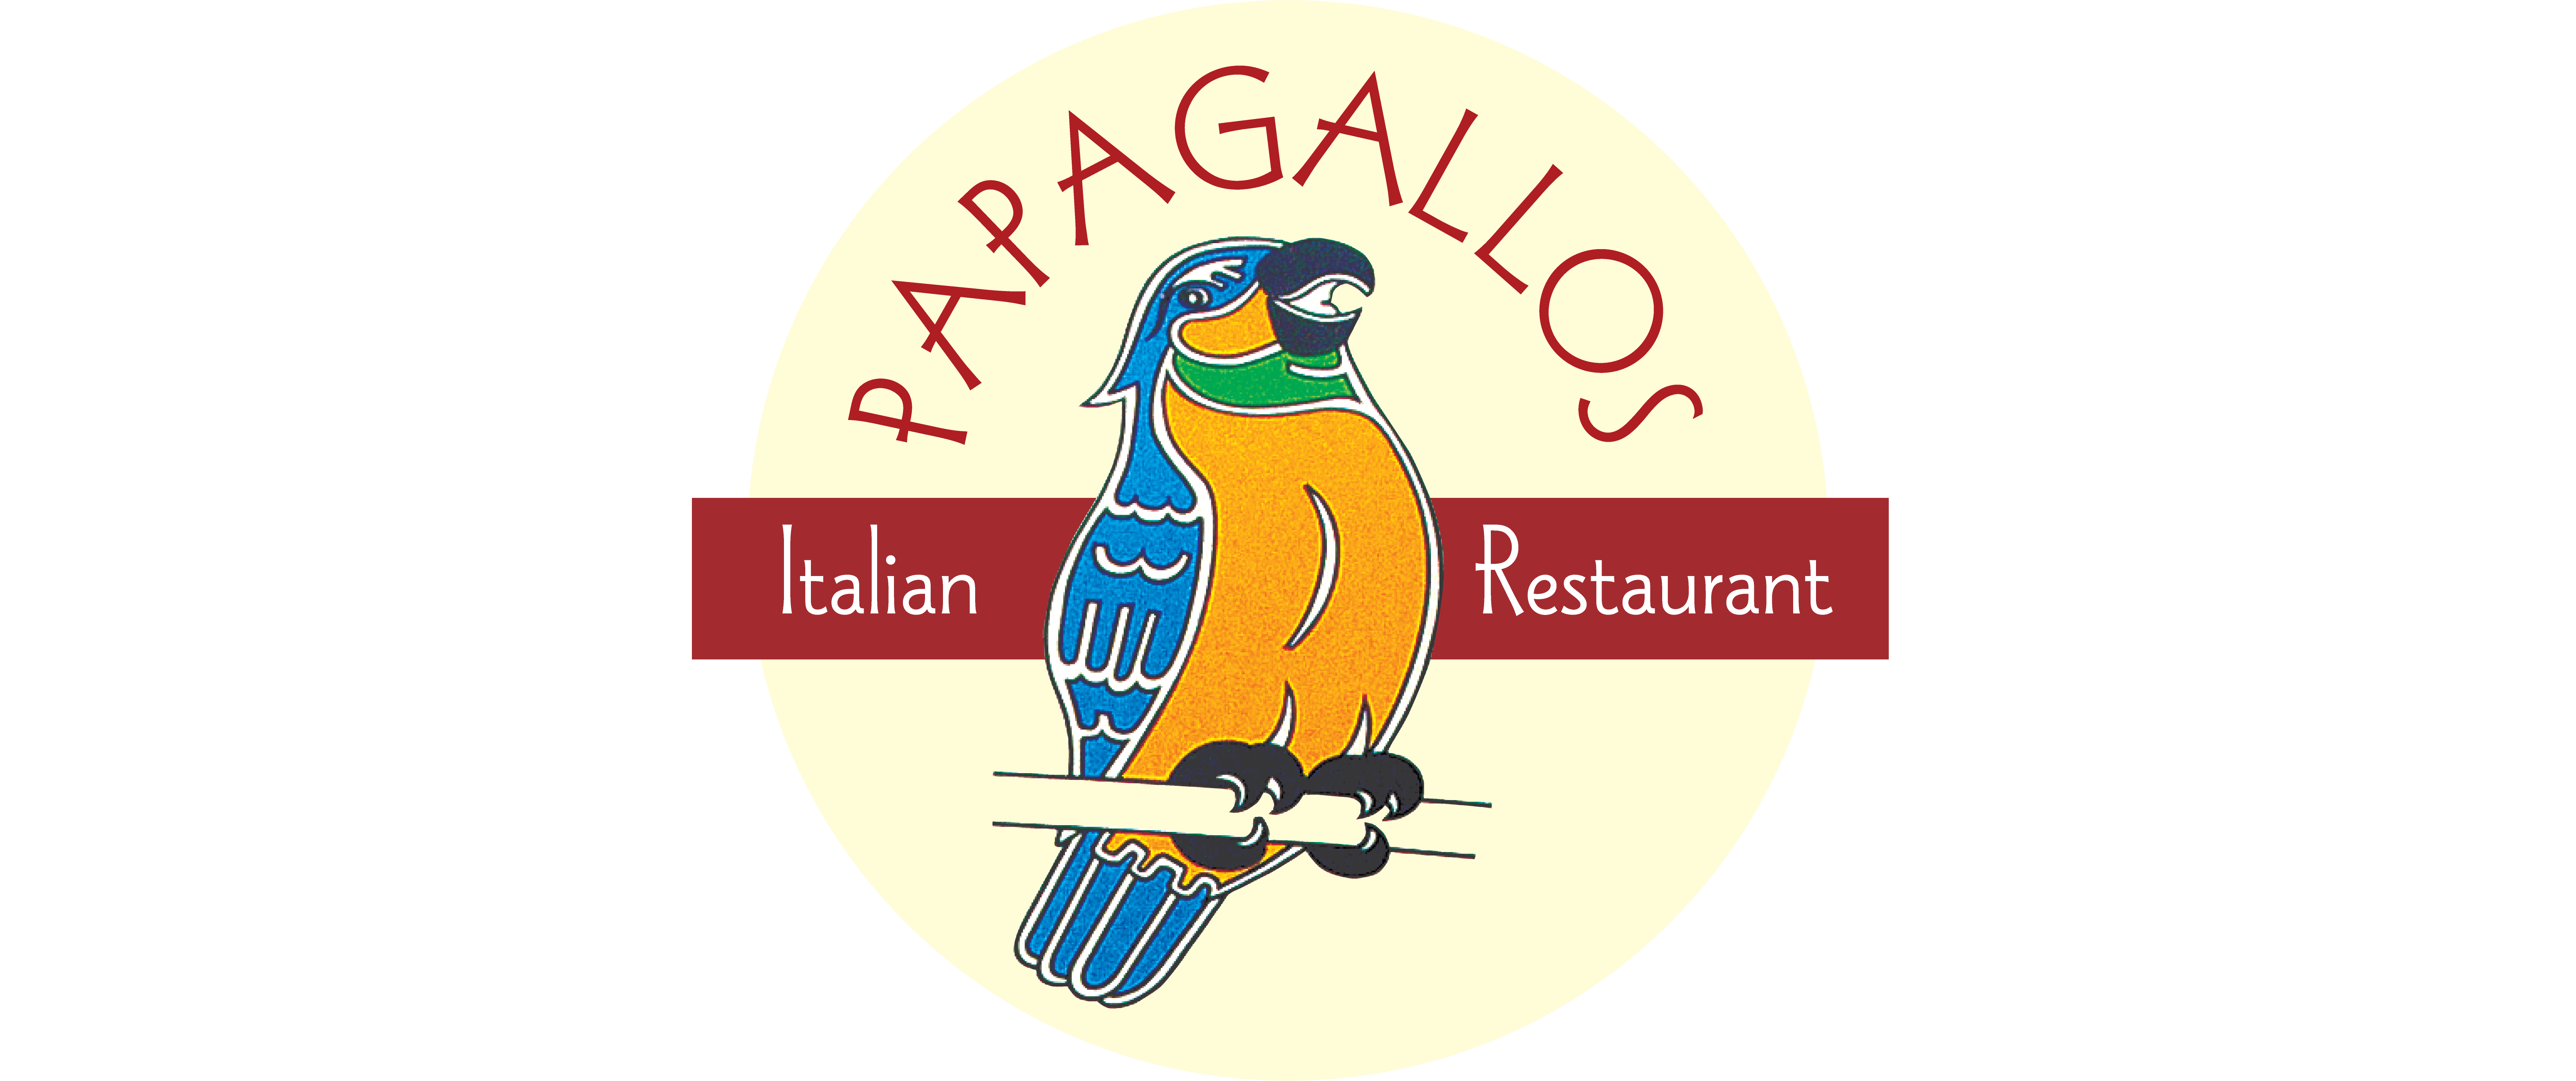 Papagallos Restaurant